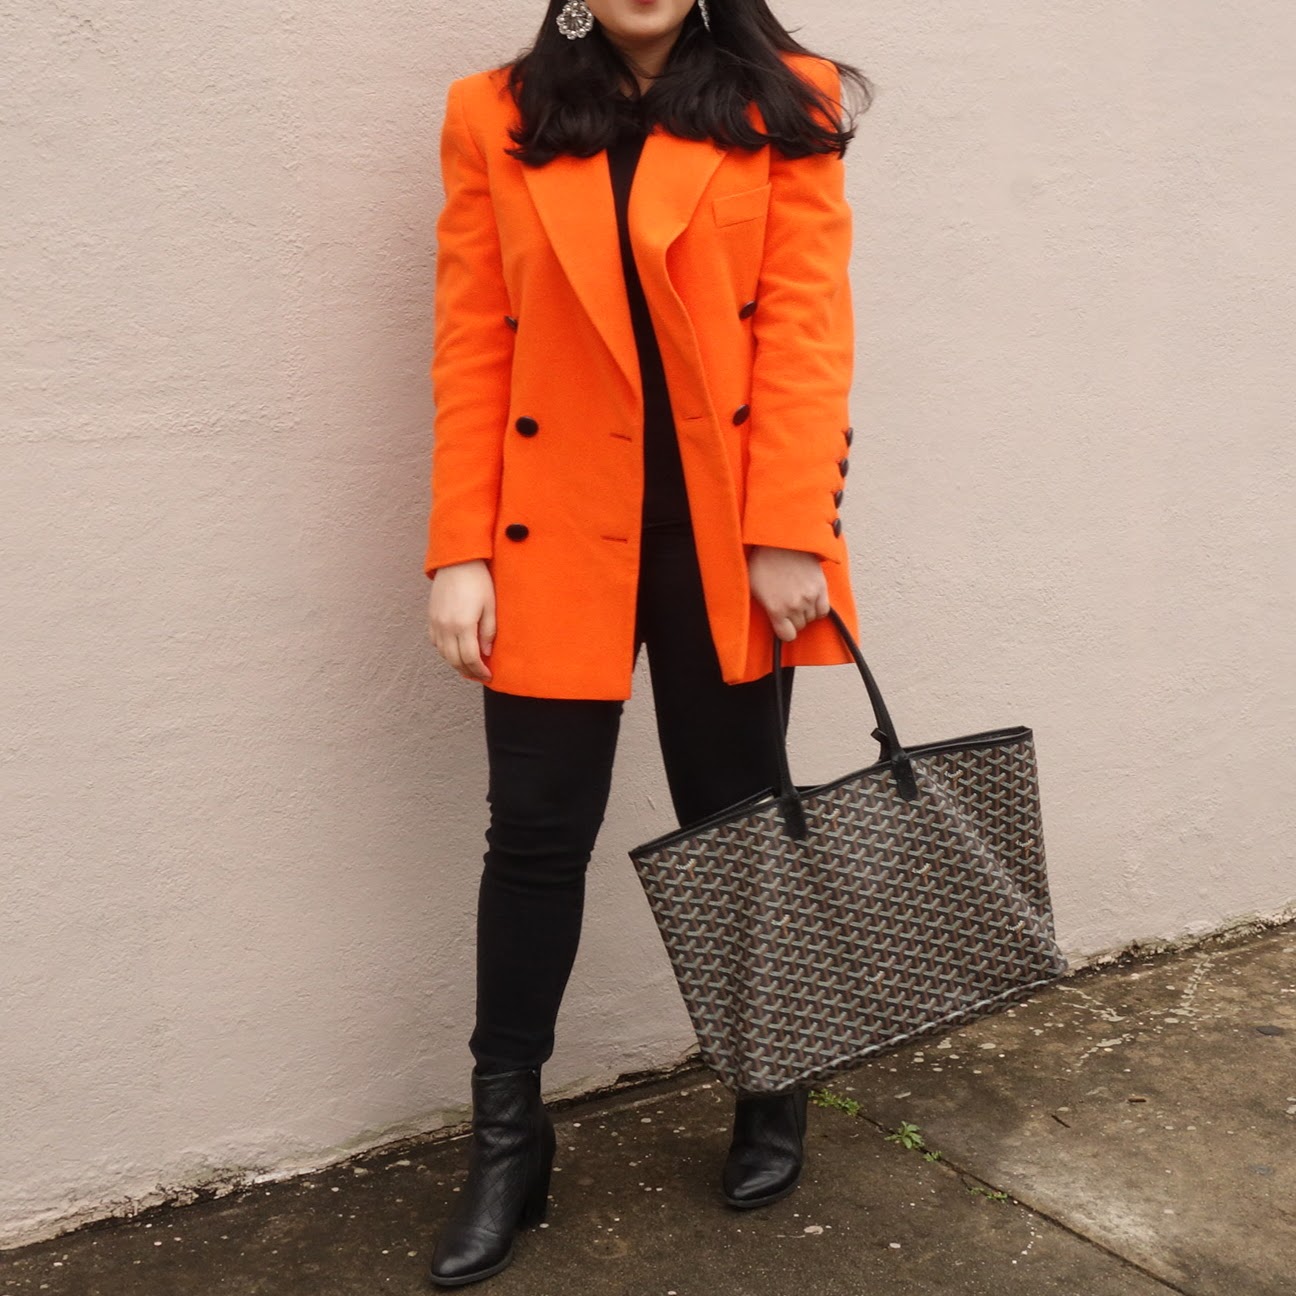 Orange Jacket, Orange Blazer Outfit, Orange and Black Outfit, Escada Blazer, Escada Vintage